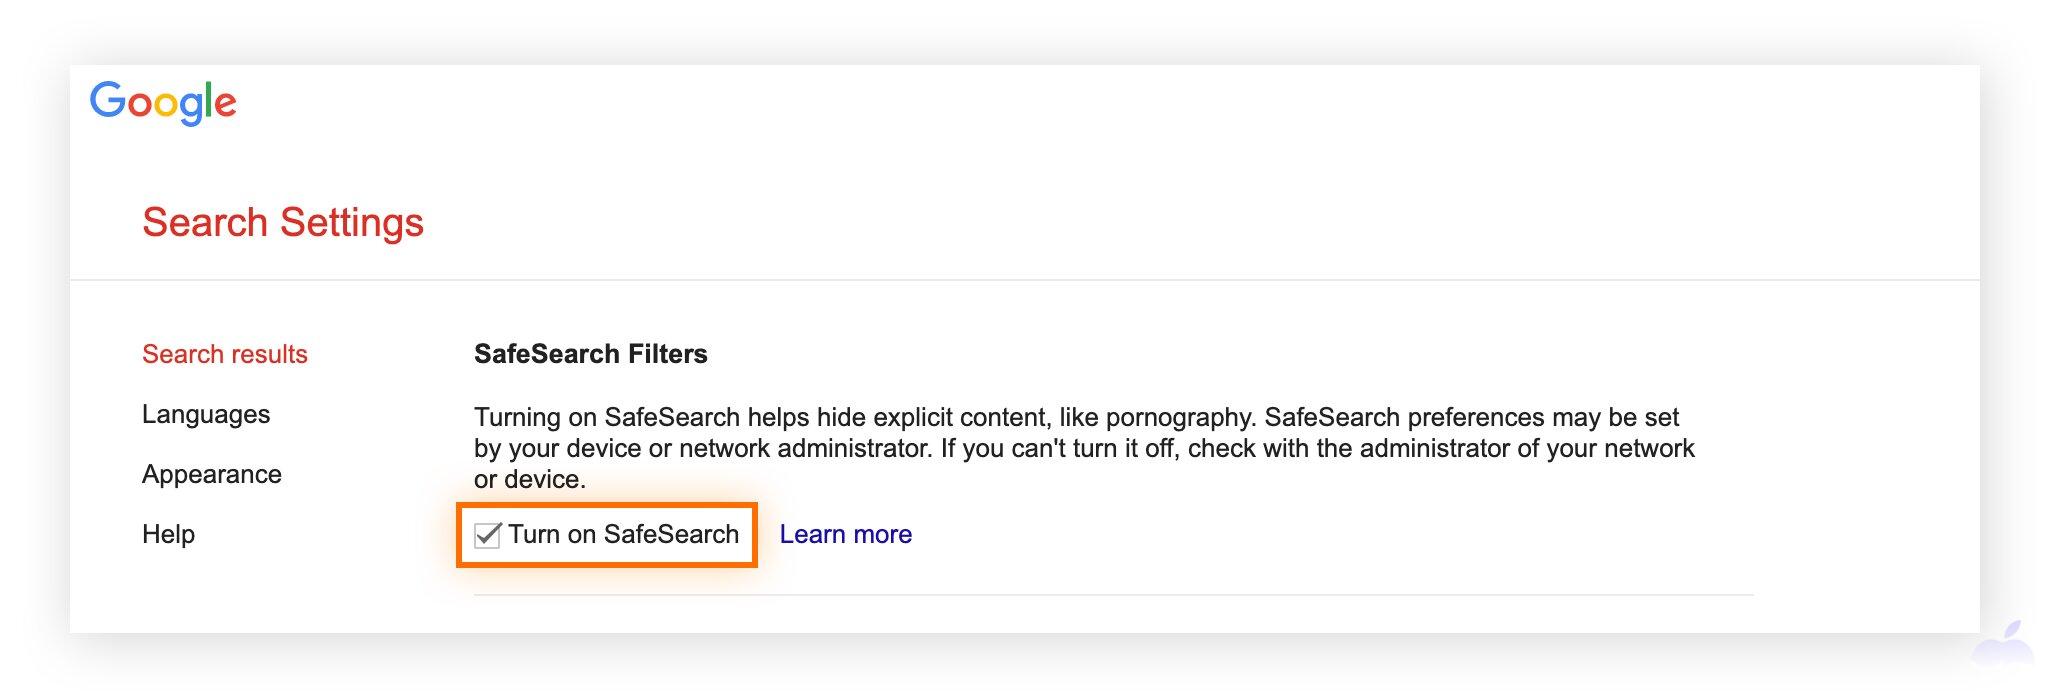 تنظیمات Google SafeSearch با Google Preferences